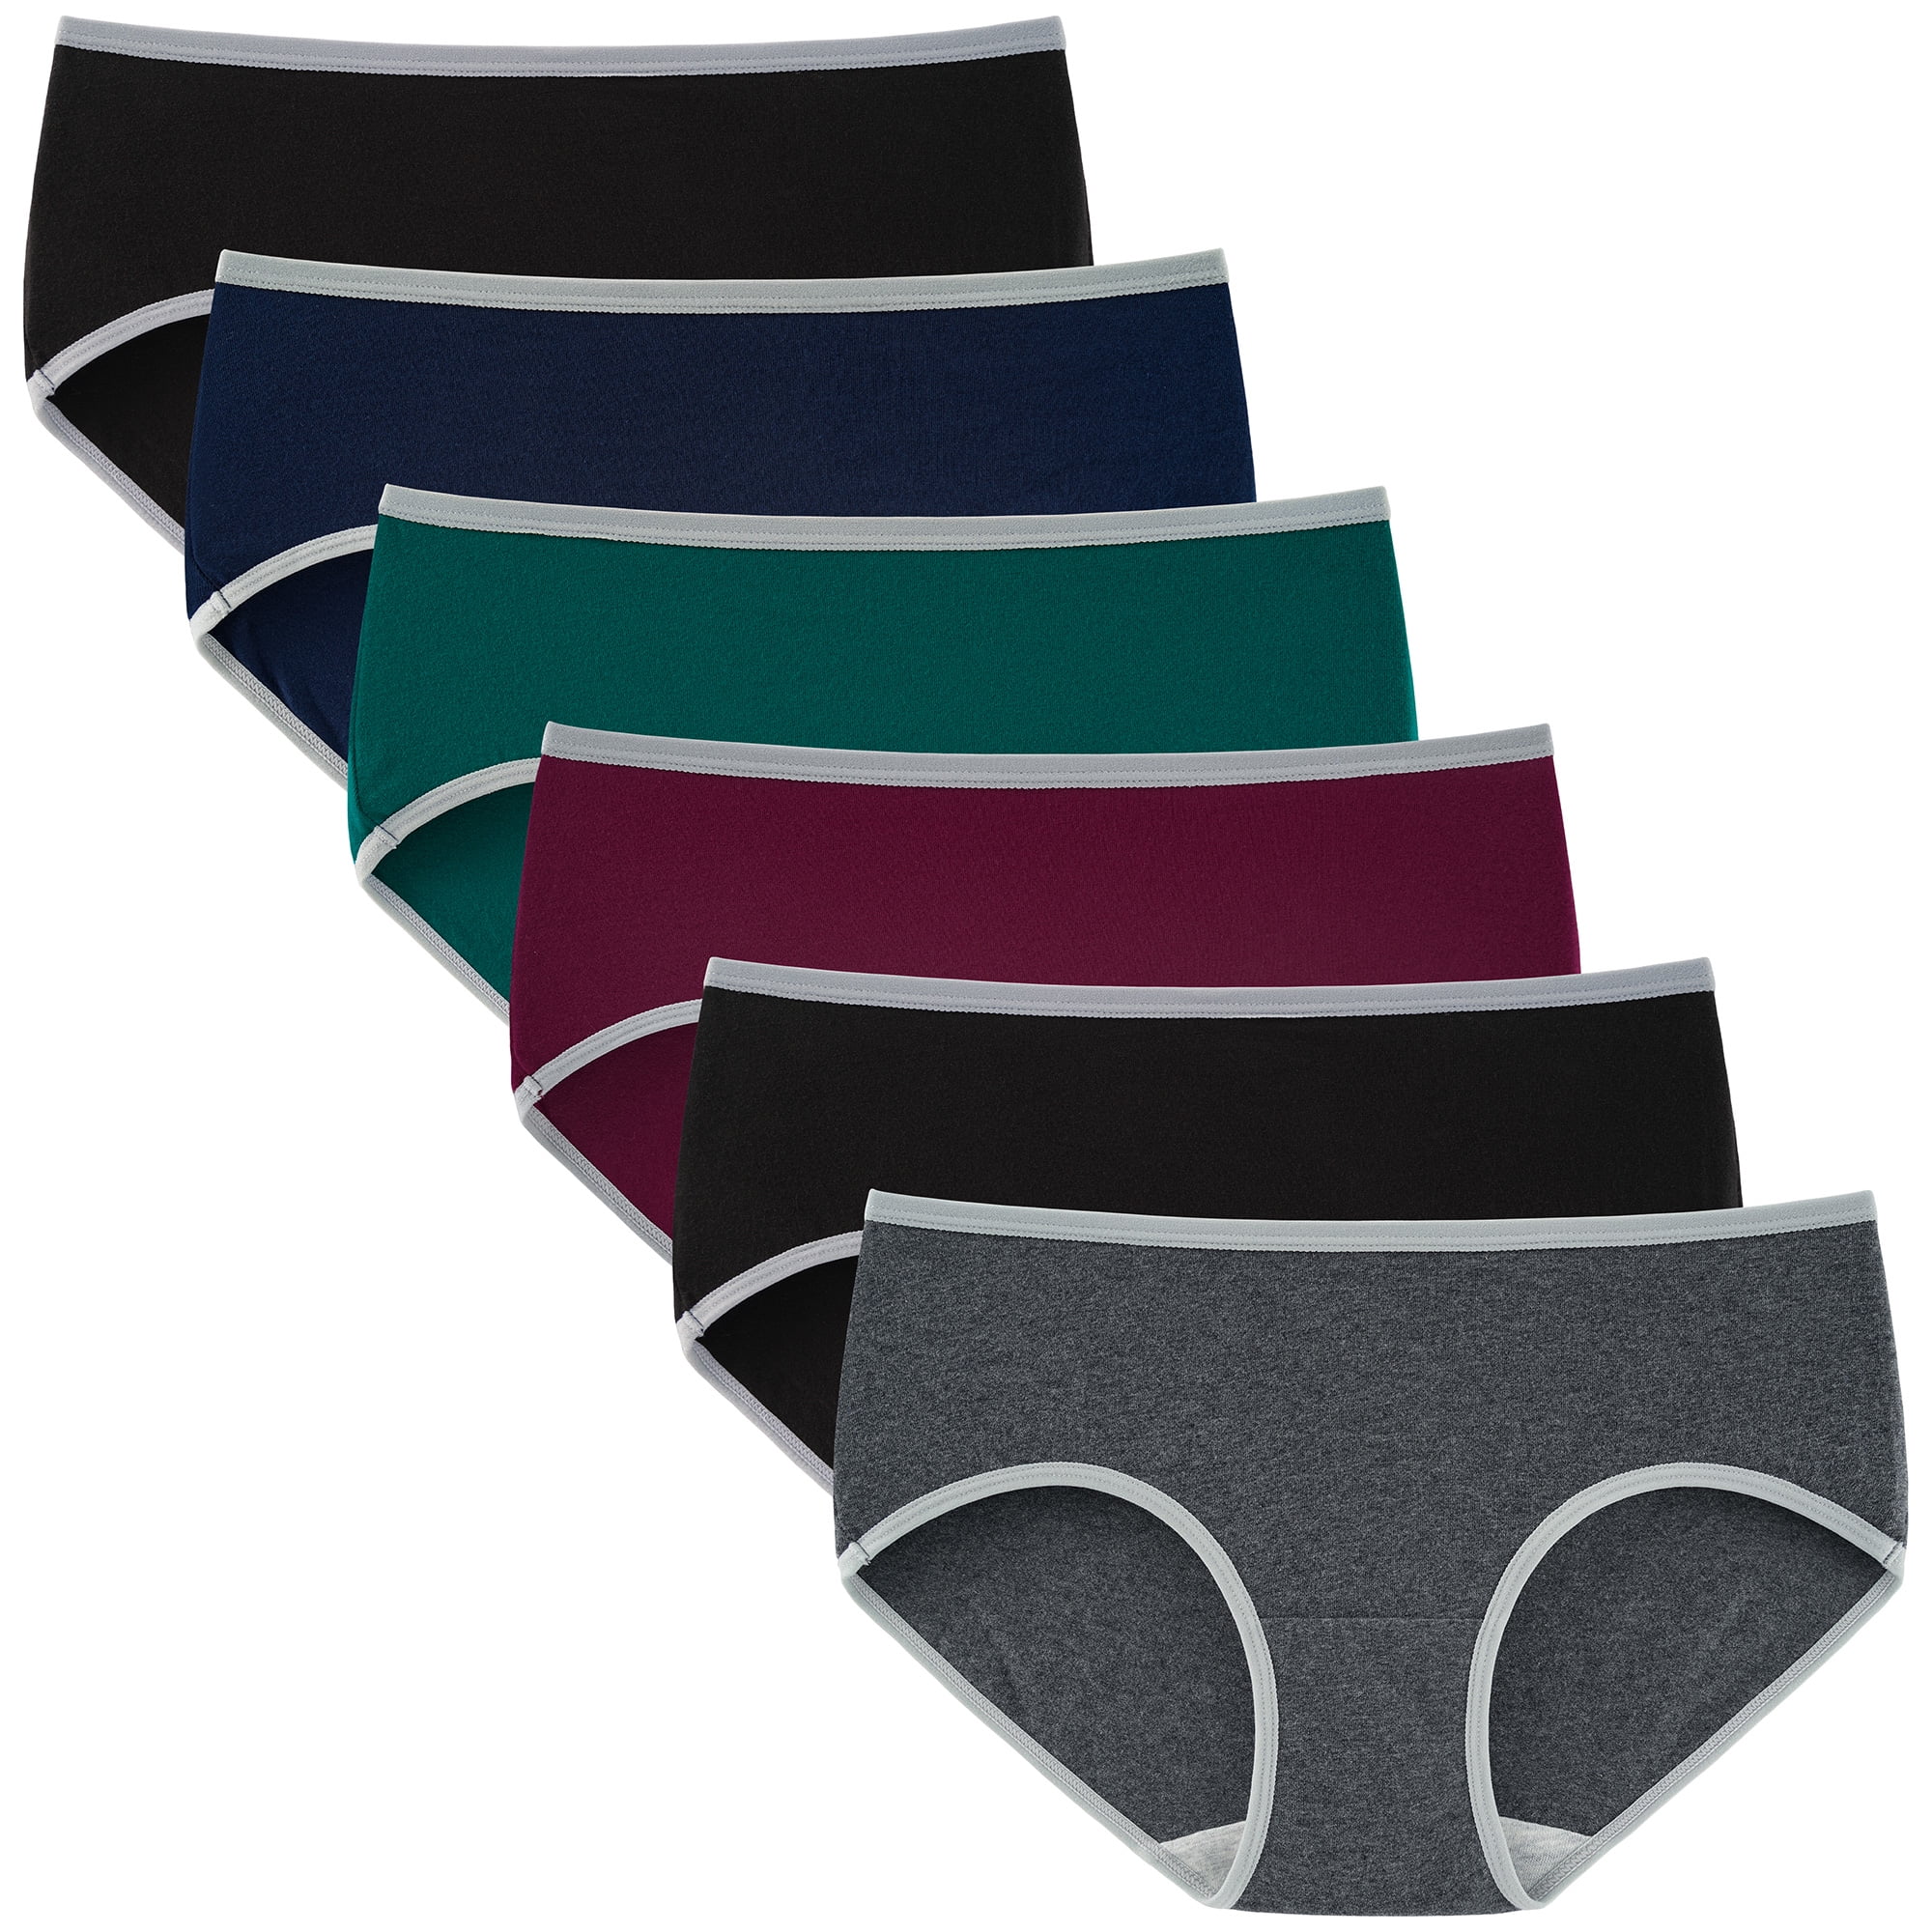 INNERSY Women's Underwear Packs Cotton Panties Hipster Regular & Plus Size  Pack of 6 (M, Dark basics with gray hem) 